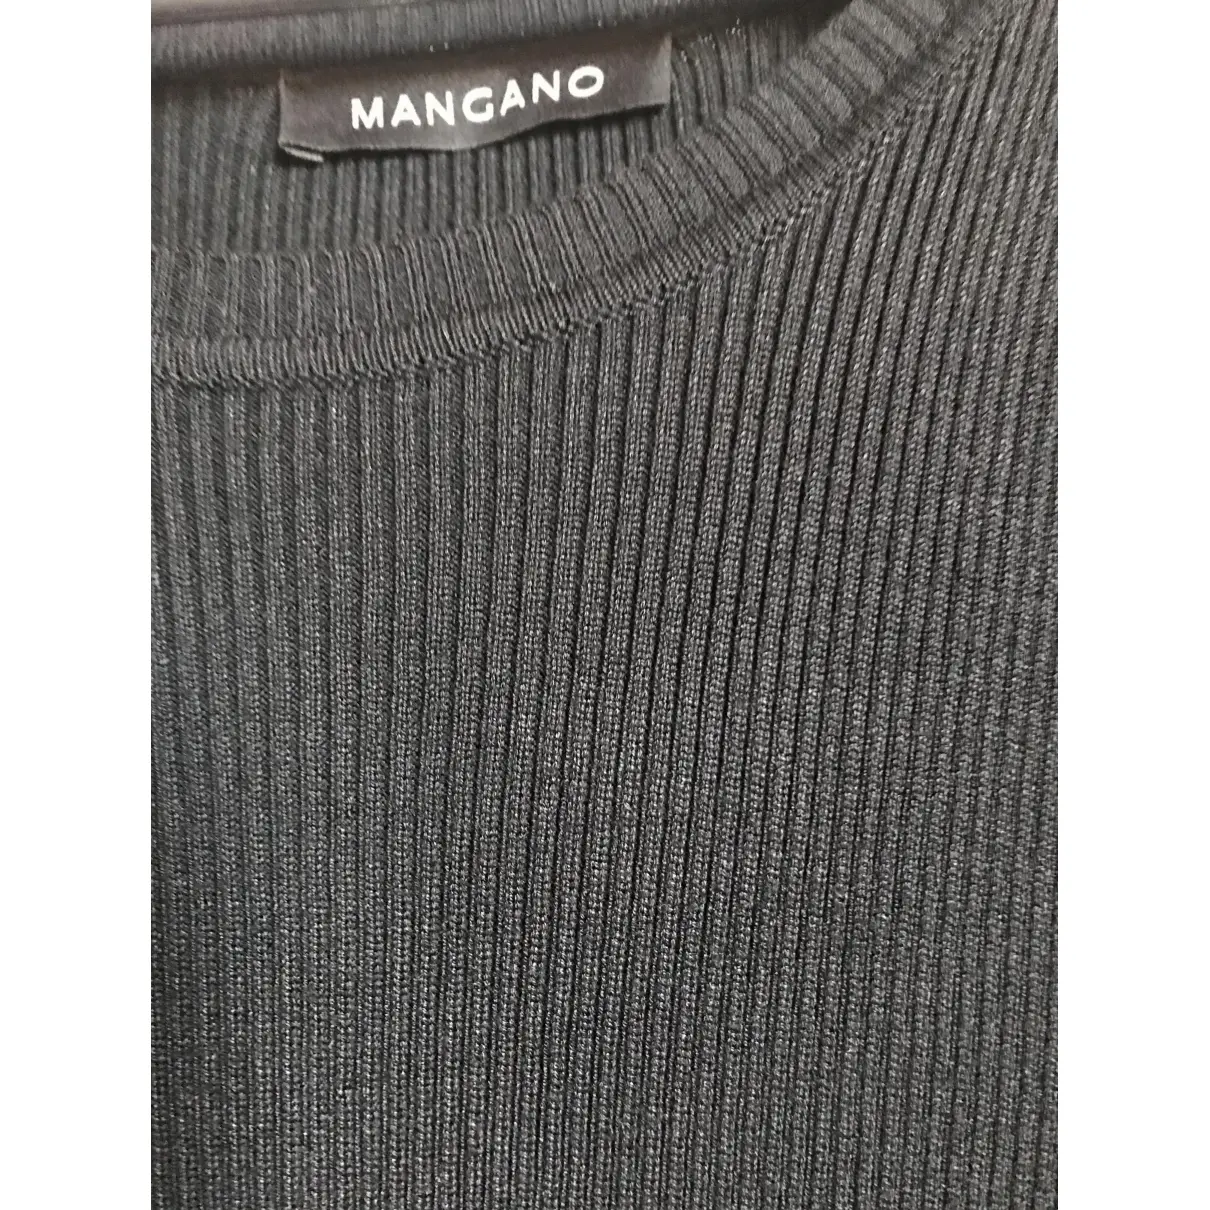 Mangano Dress for sale